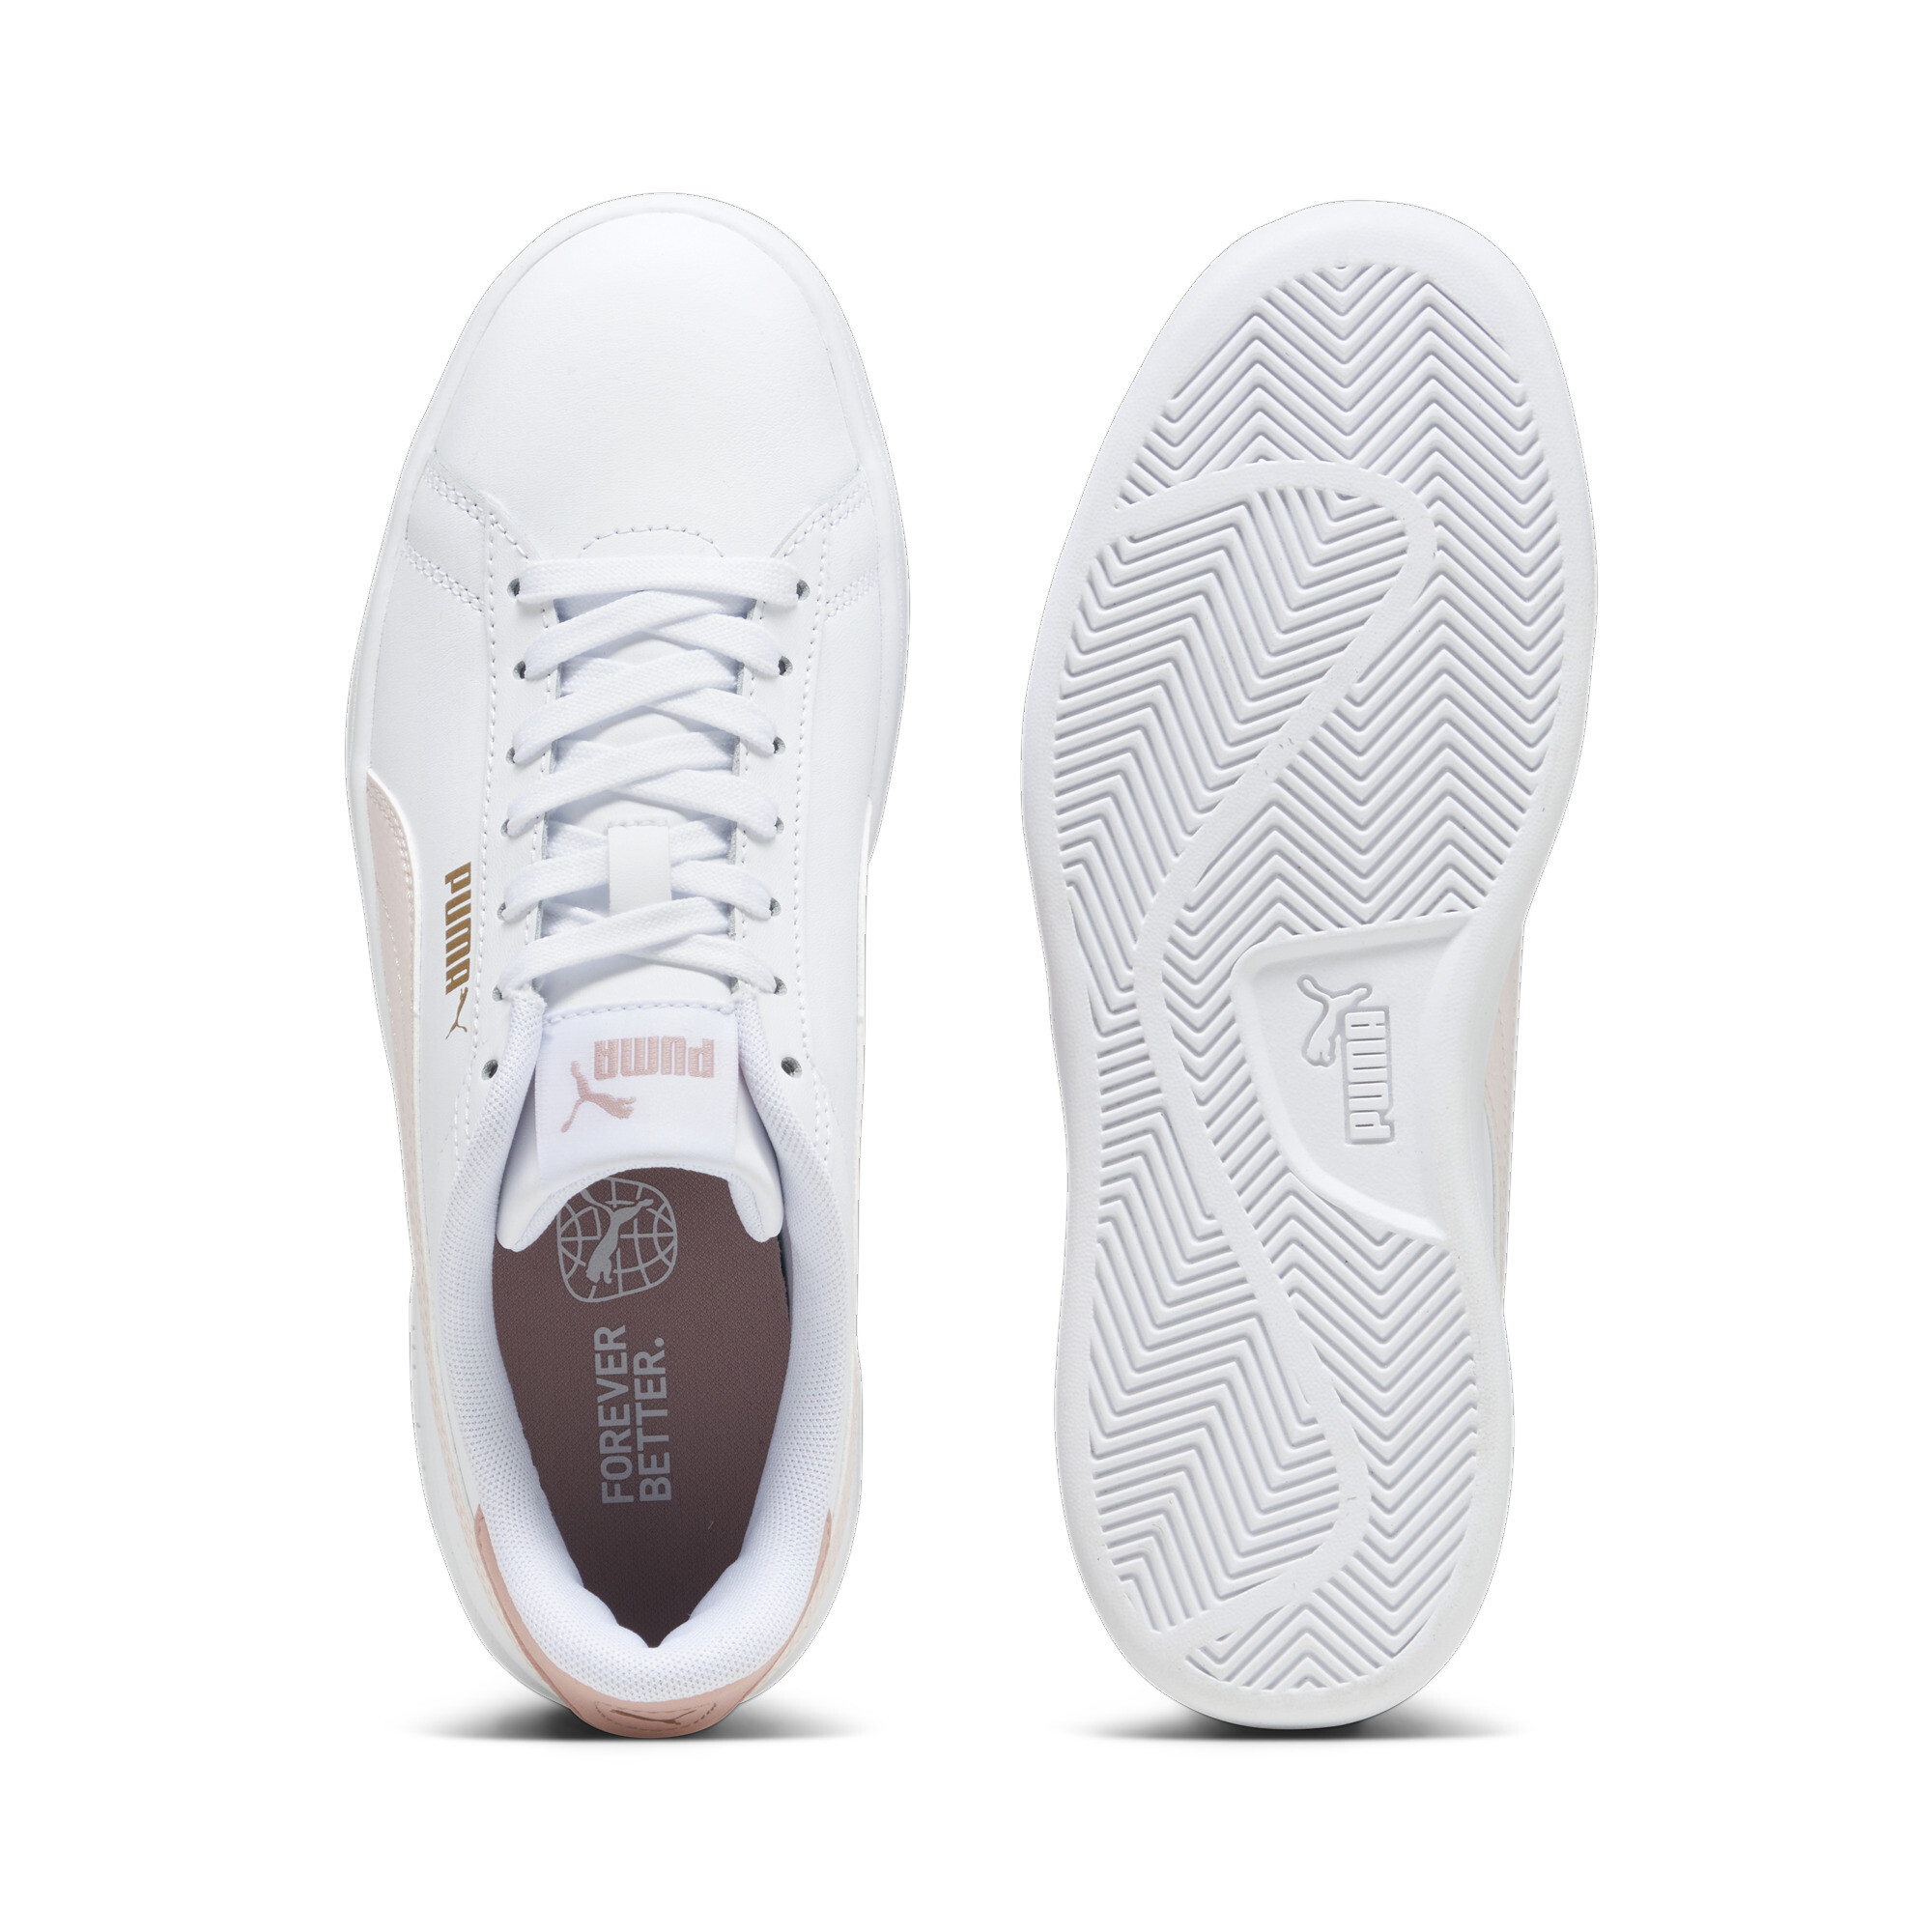 Puma Smash 3.0 L Sneakers, White, Size 46, Shoes